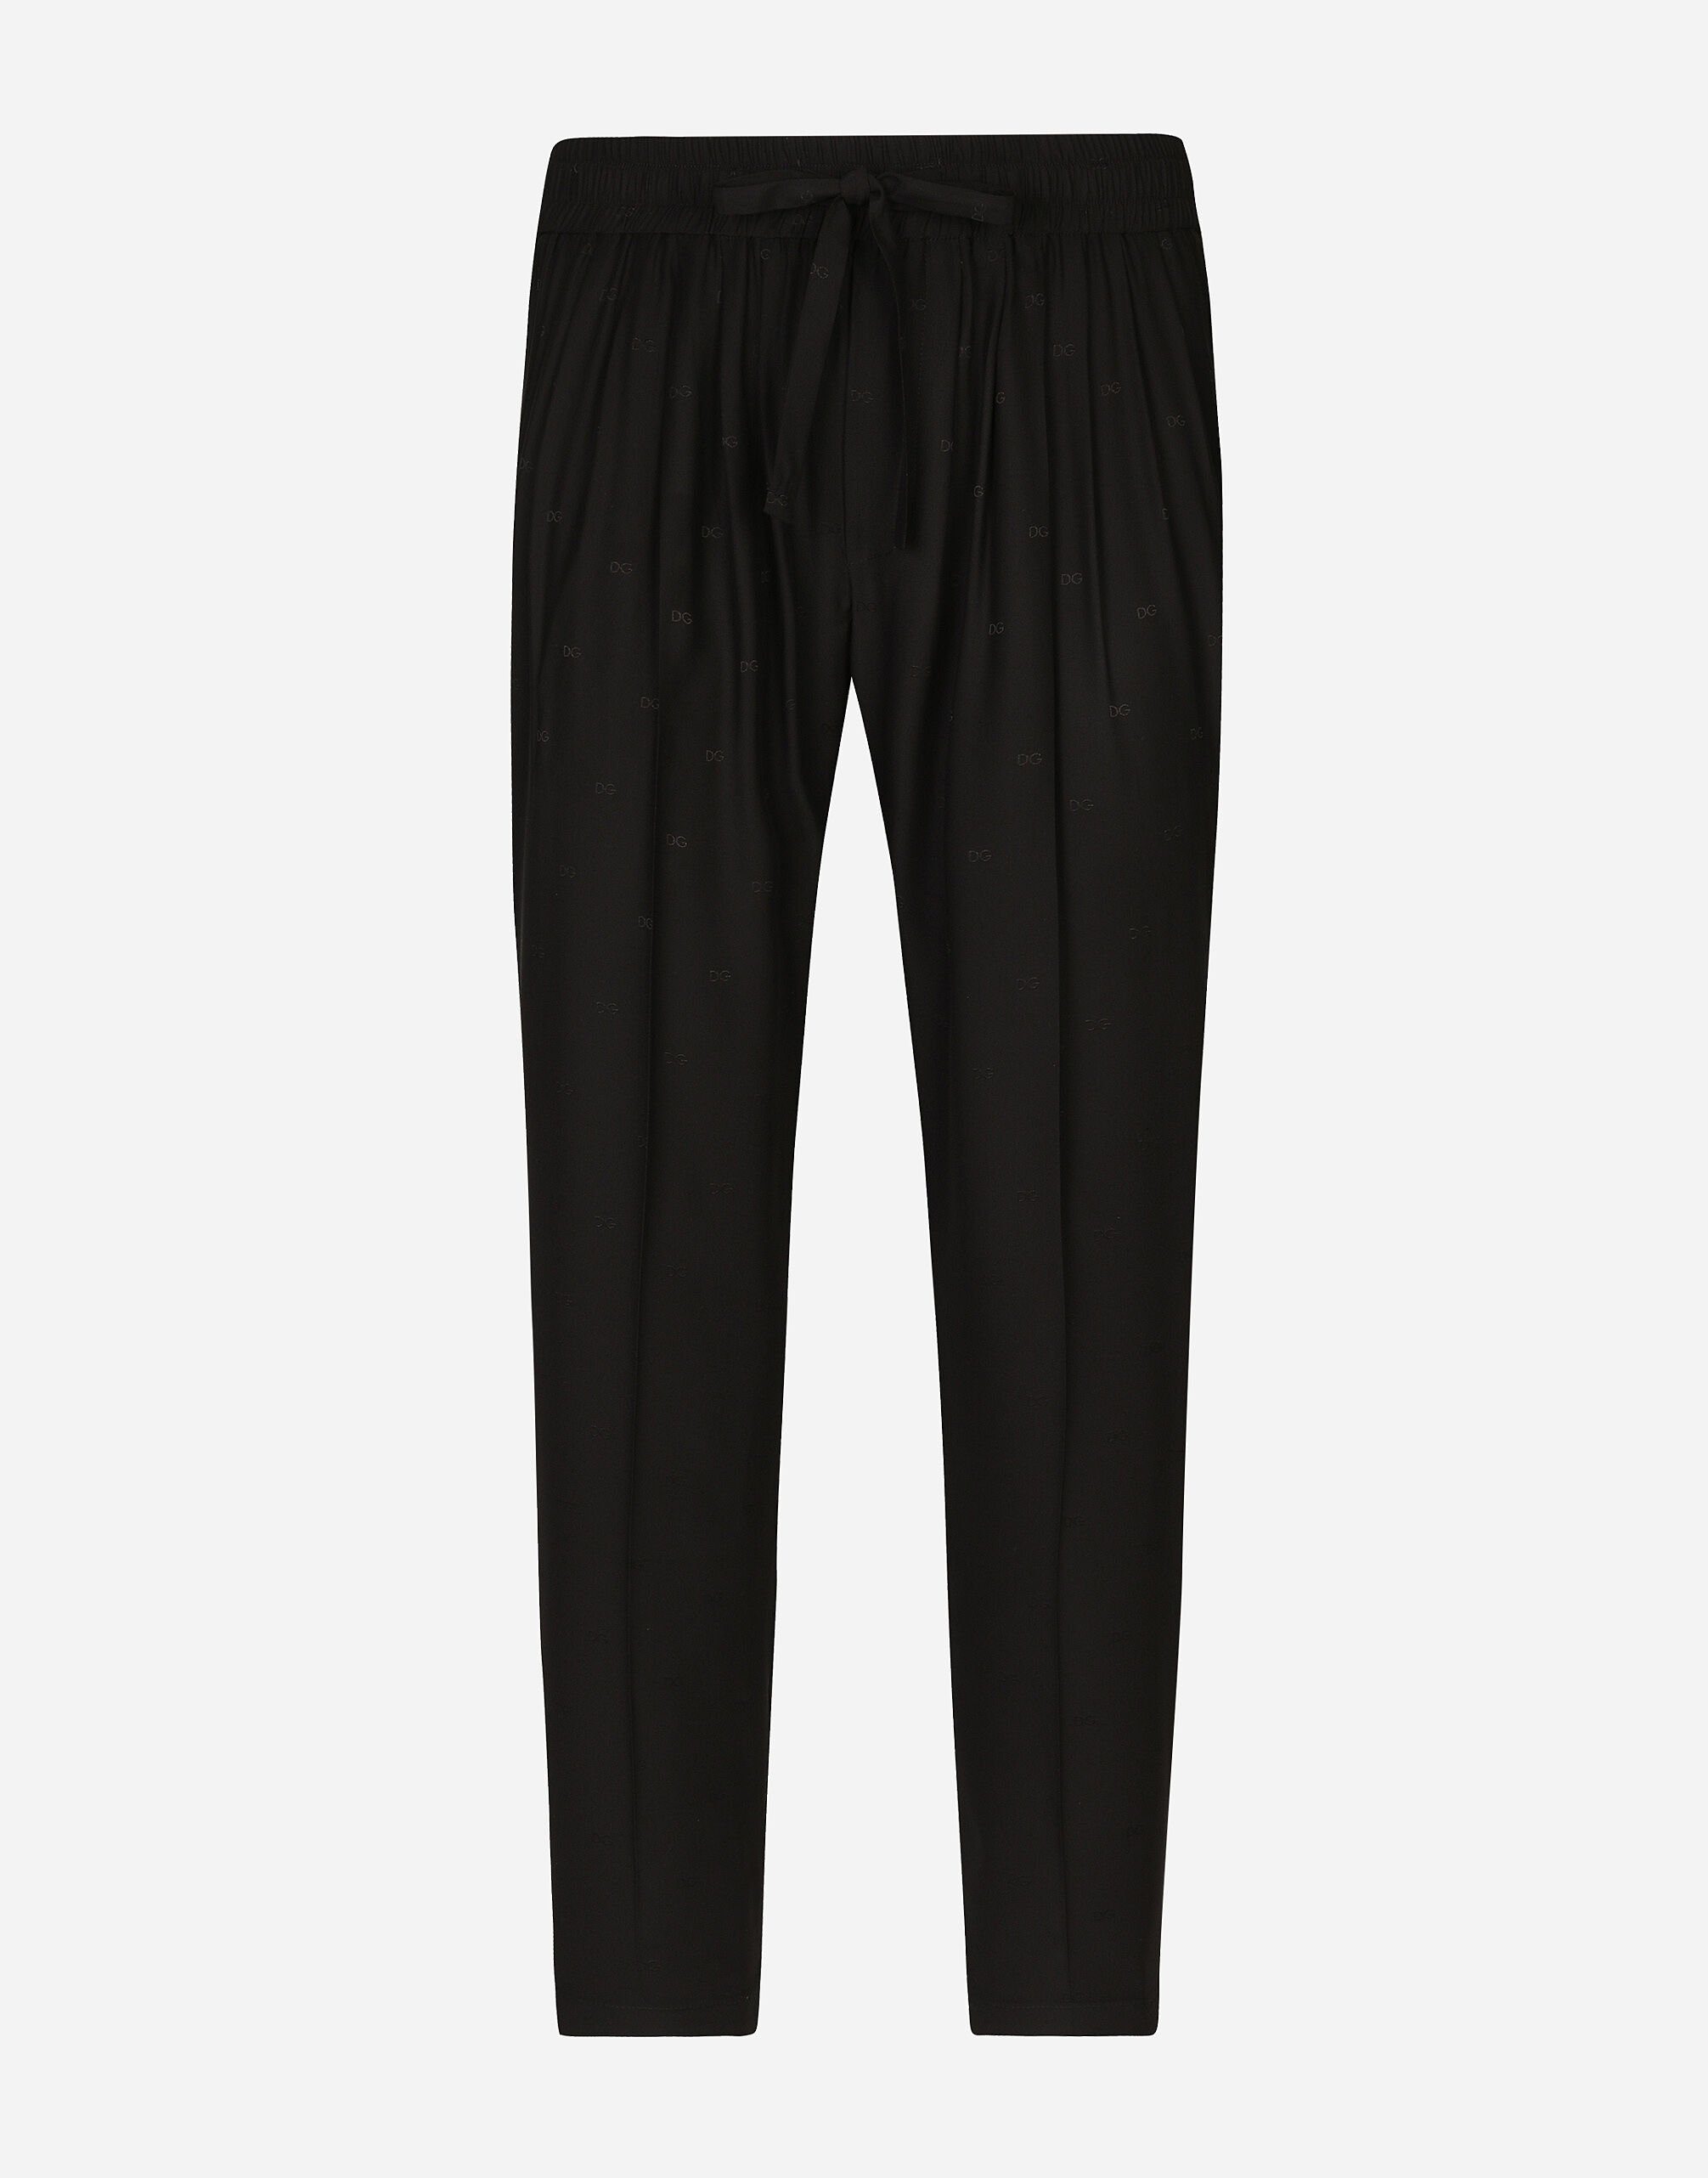 Dolce & Gabbana Silk crepe de chine jogging pants Black VG4461VP187